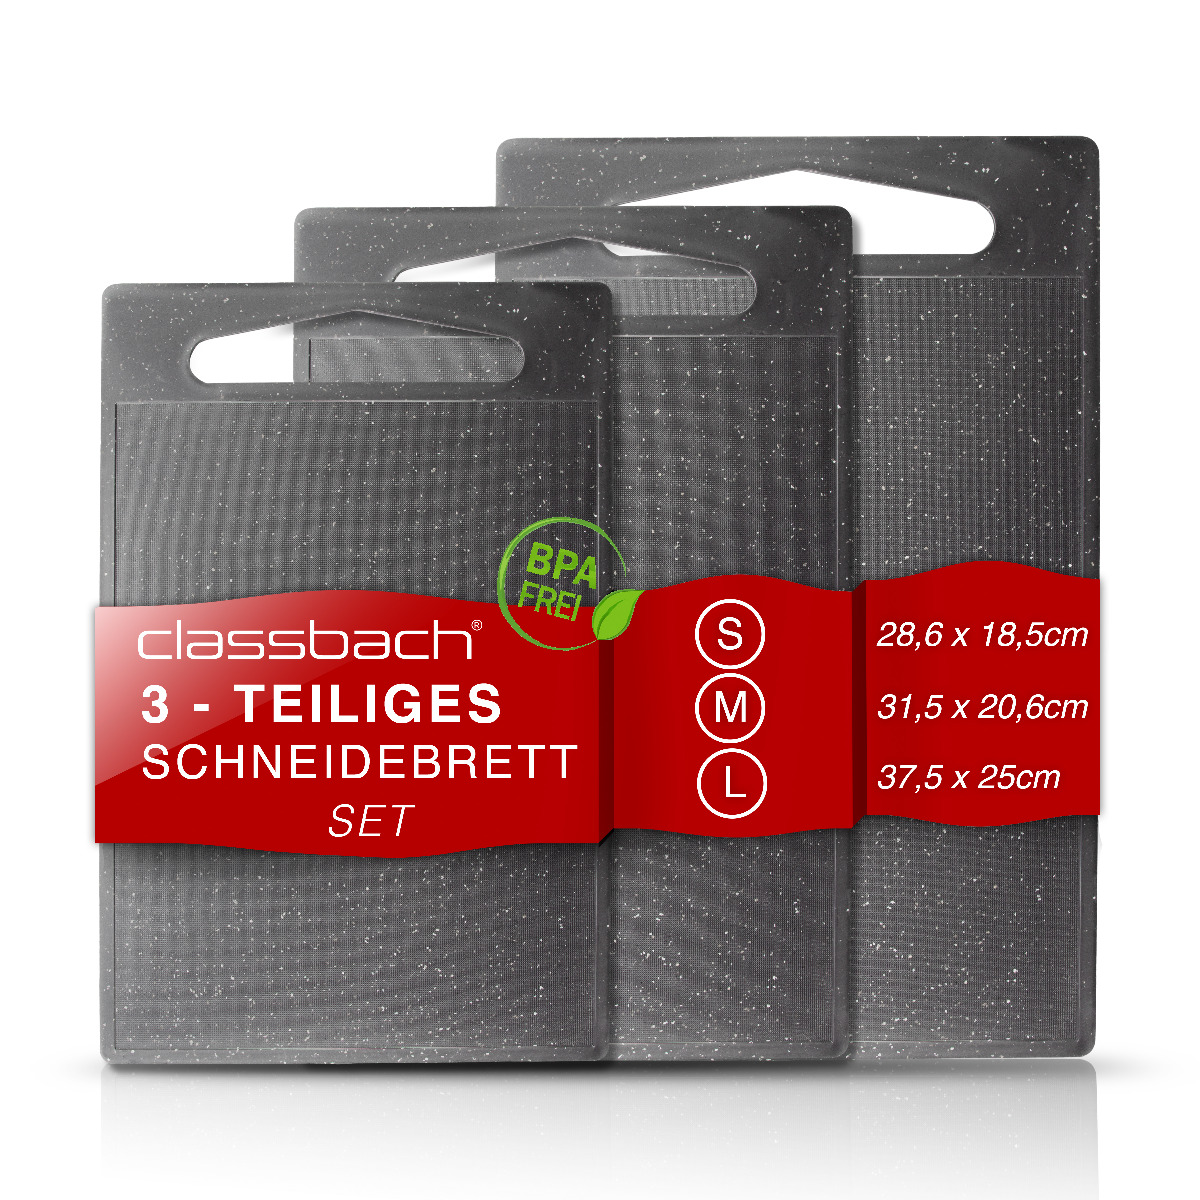 C-SB Granitoptik Set 4012 profi-electro.de in K Classbach Schneidebretter 3er hellgrau